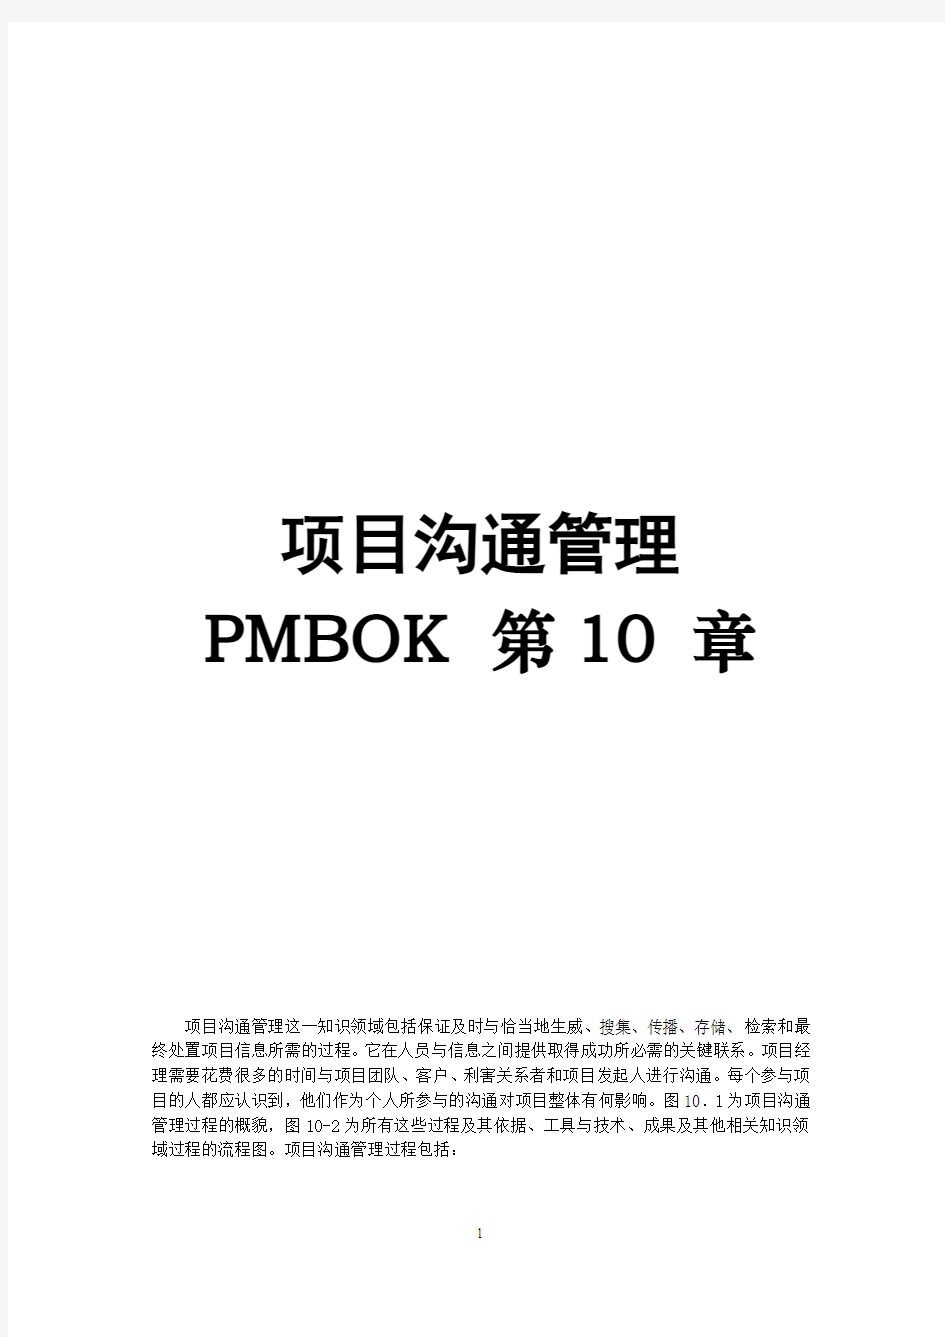 PMBOK第10章项目沟通管理